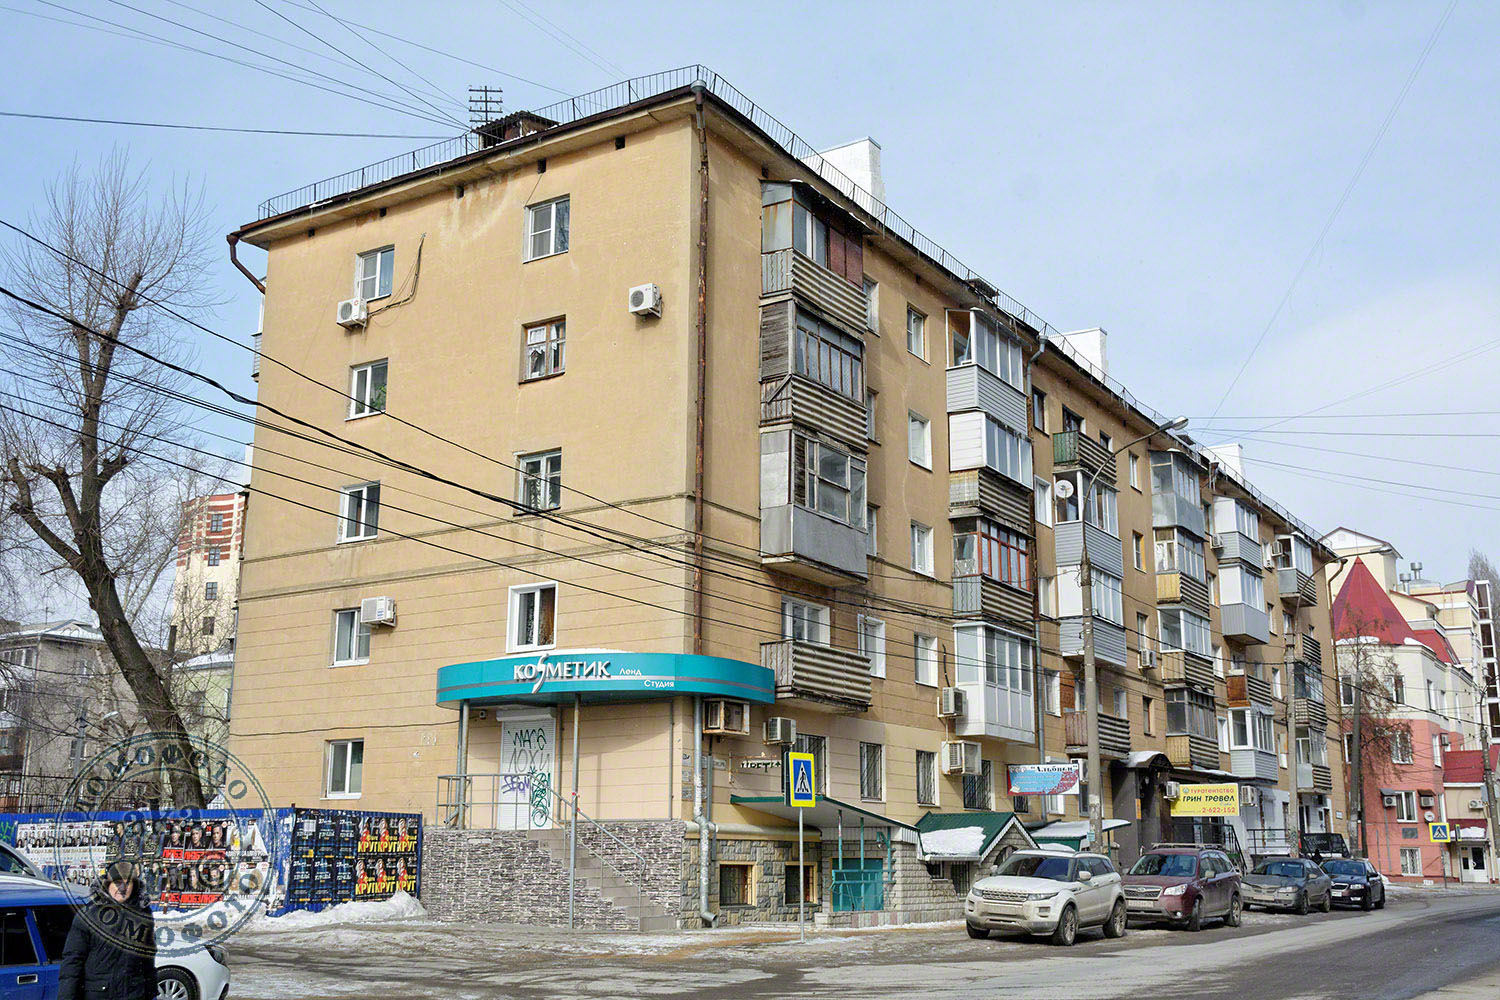 Woroneż, Улица Станкевича, 4